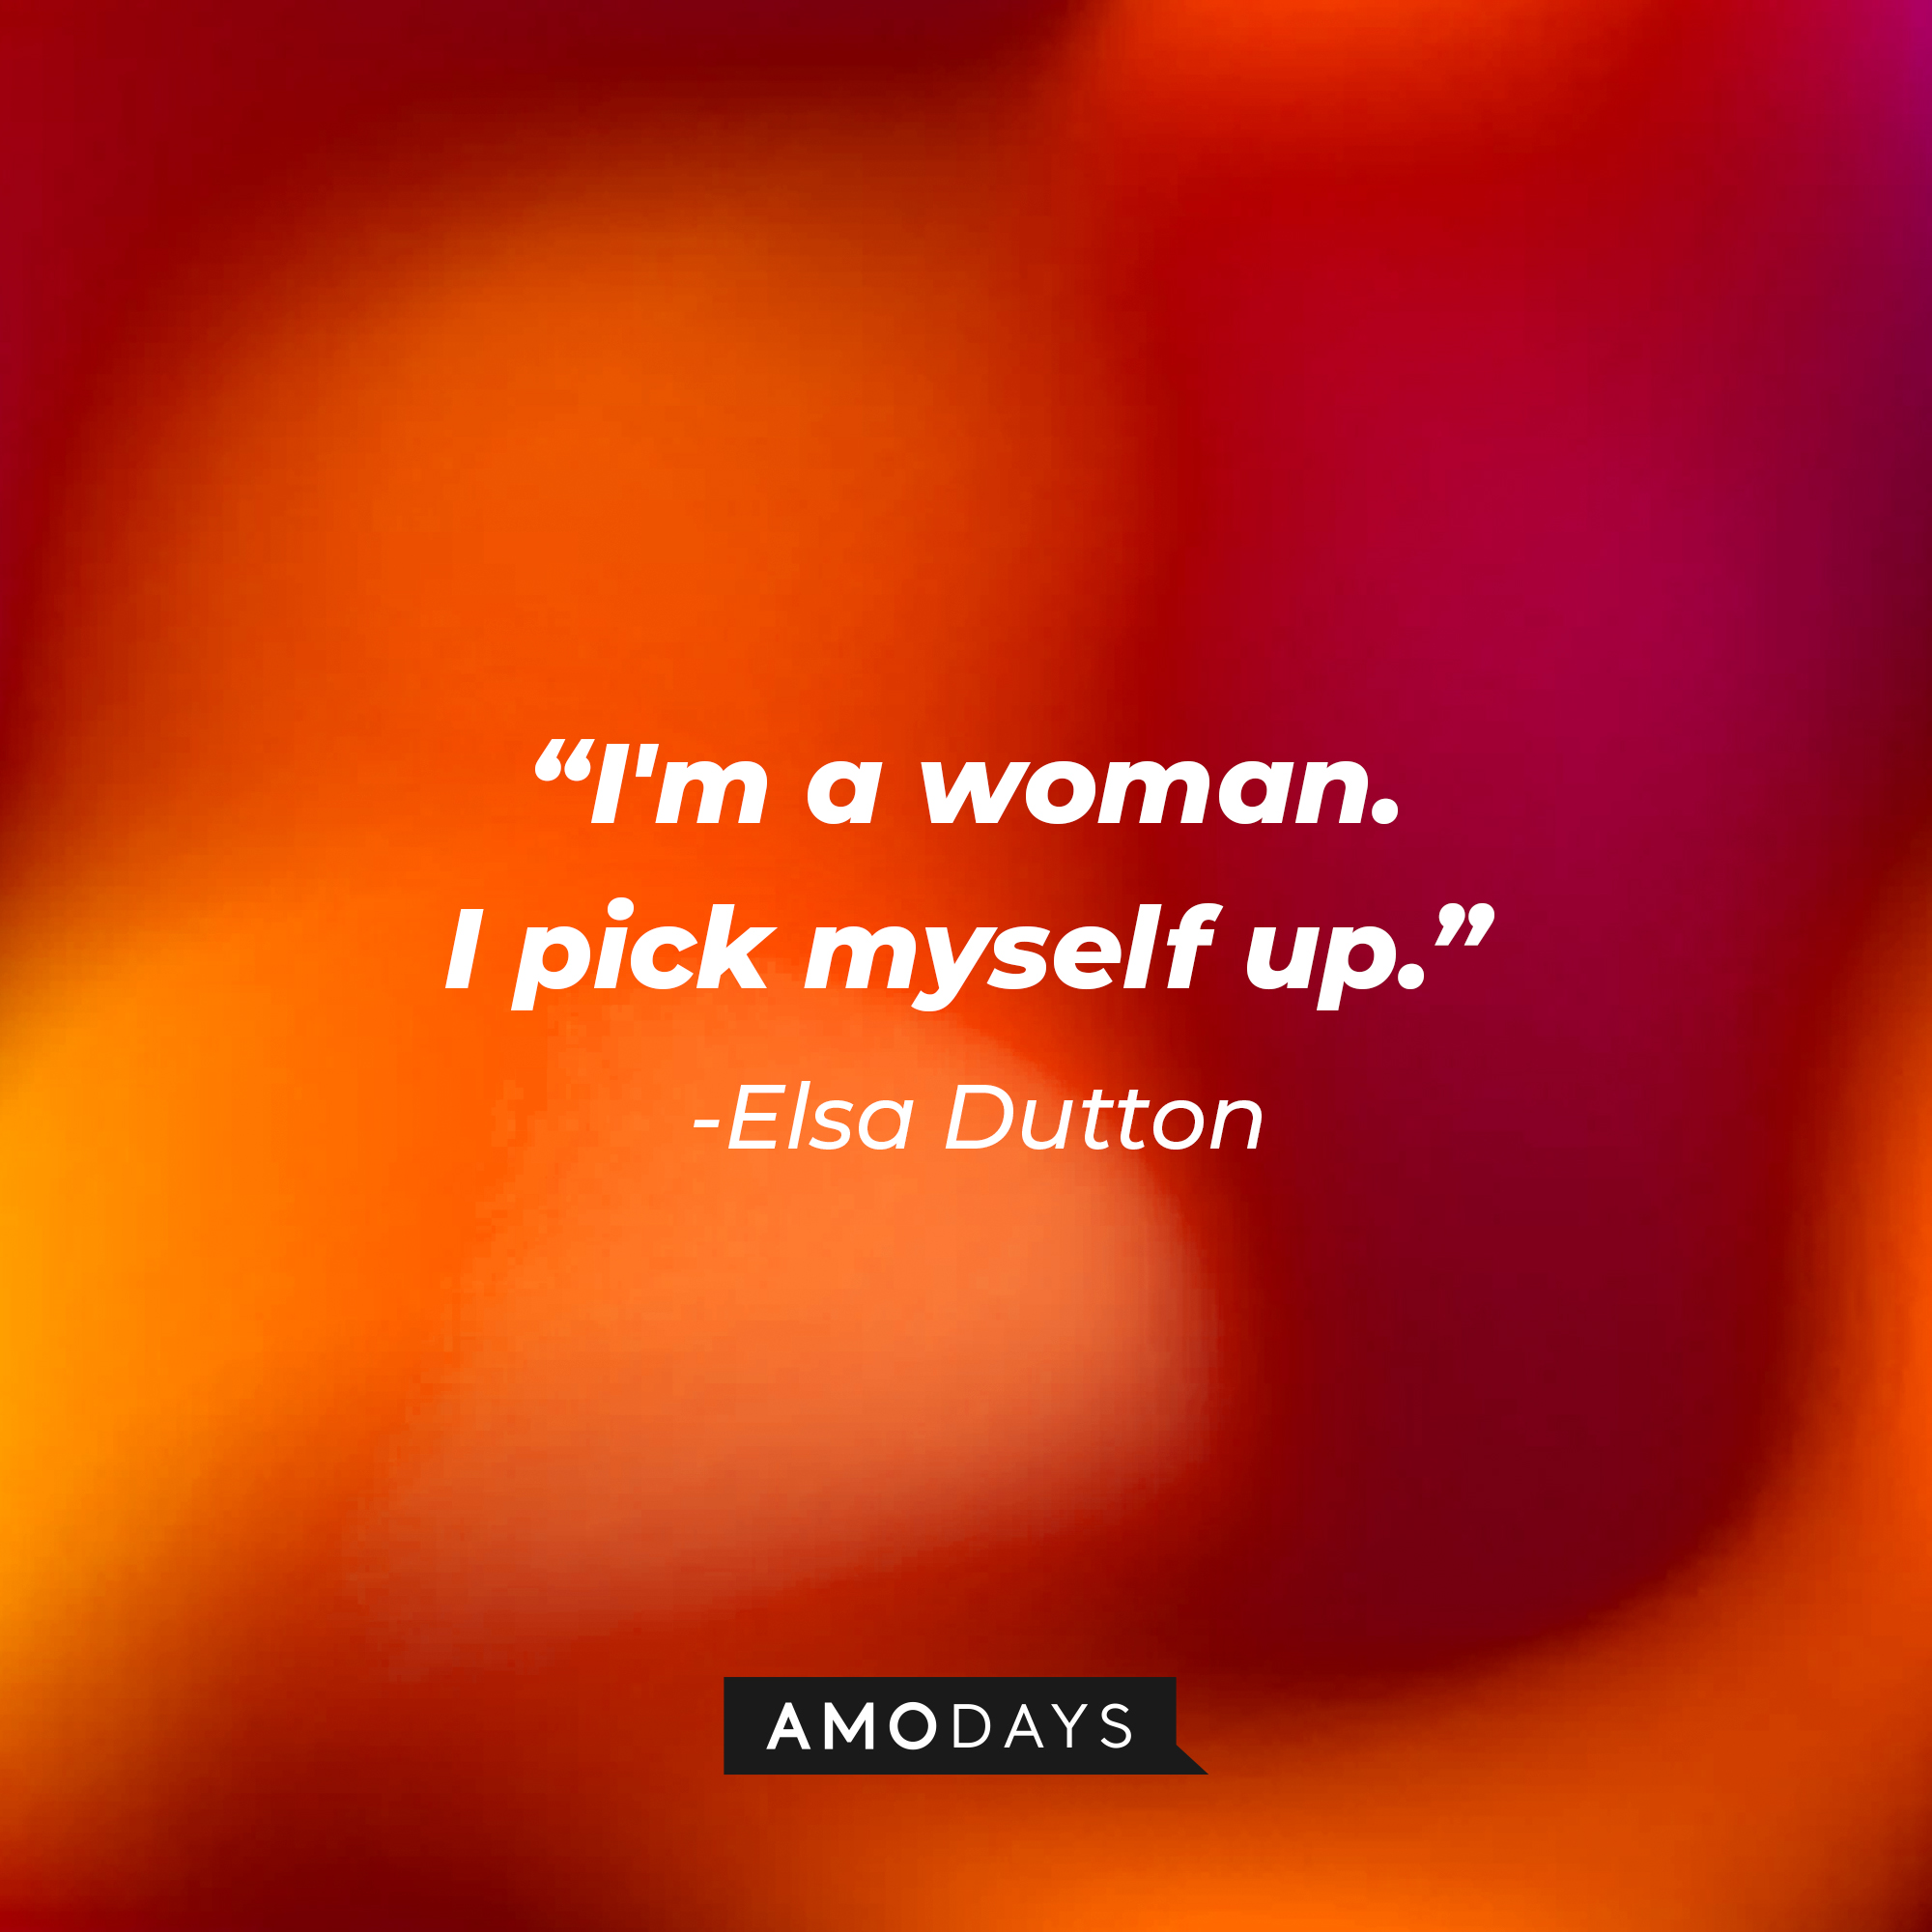 Elsa Dutton's quote: "I'm a woman. I pick myself up." | Source: AmoDays